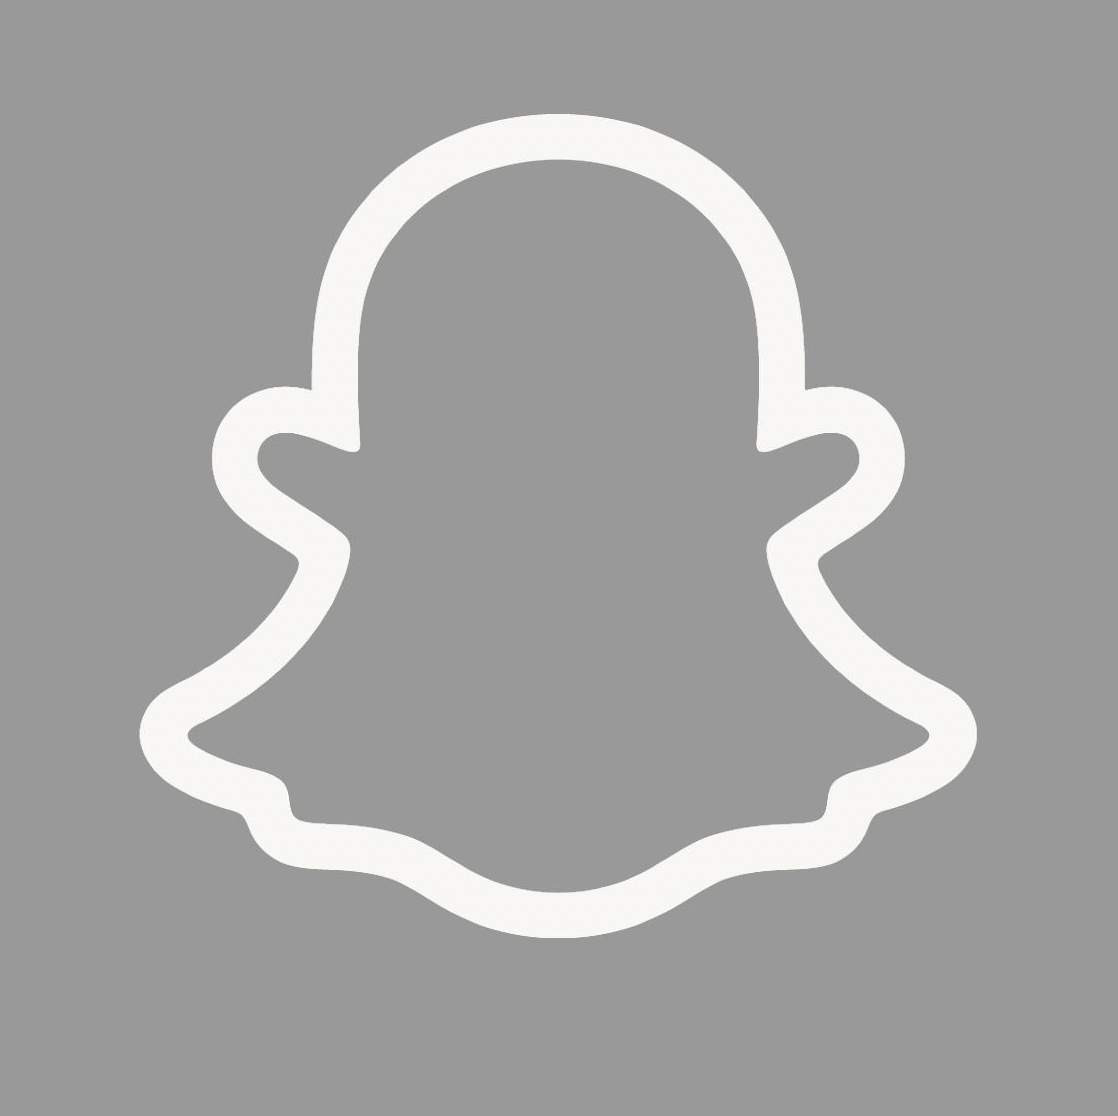 Snapchat logo (gray)